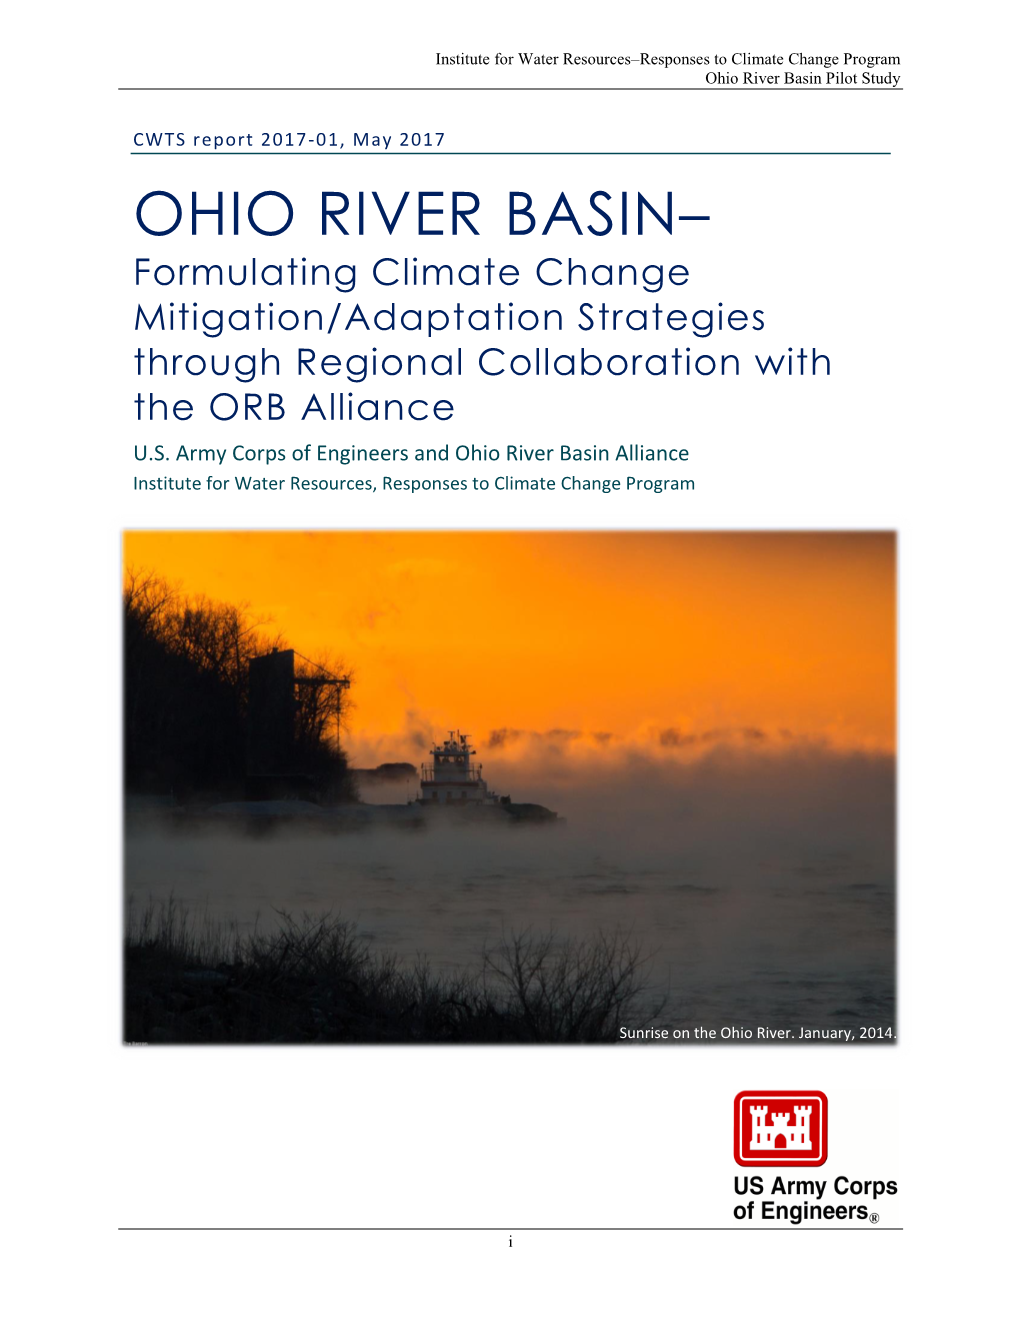 Ohio River Basin Pilot Study